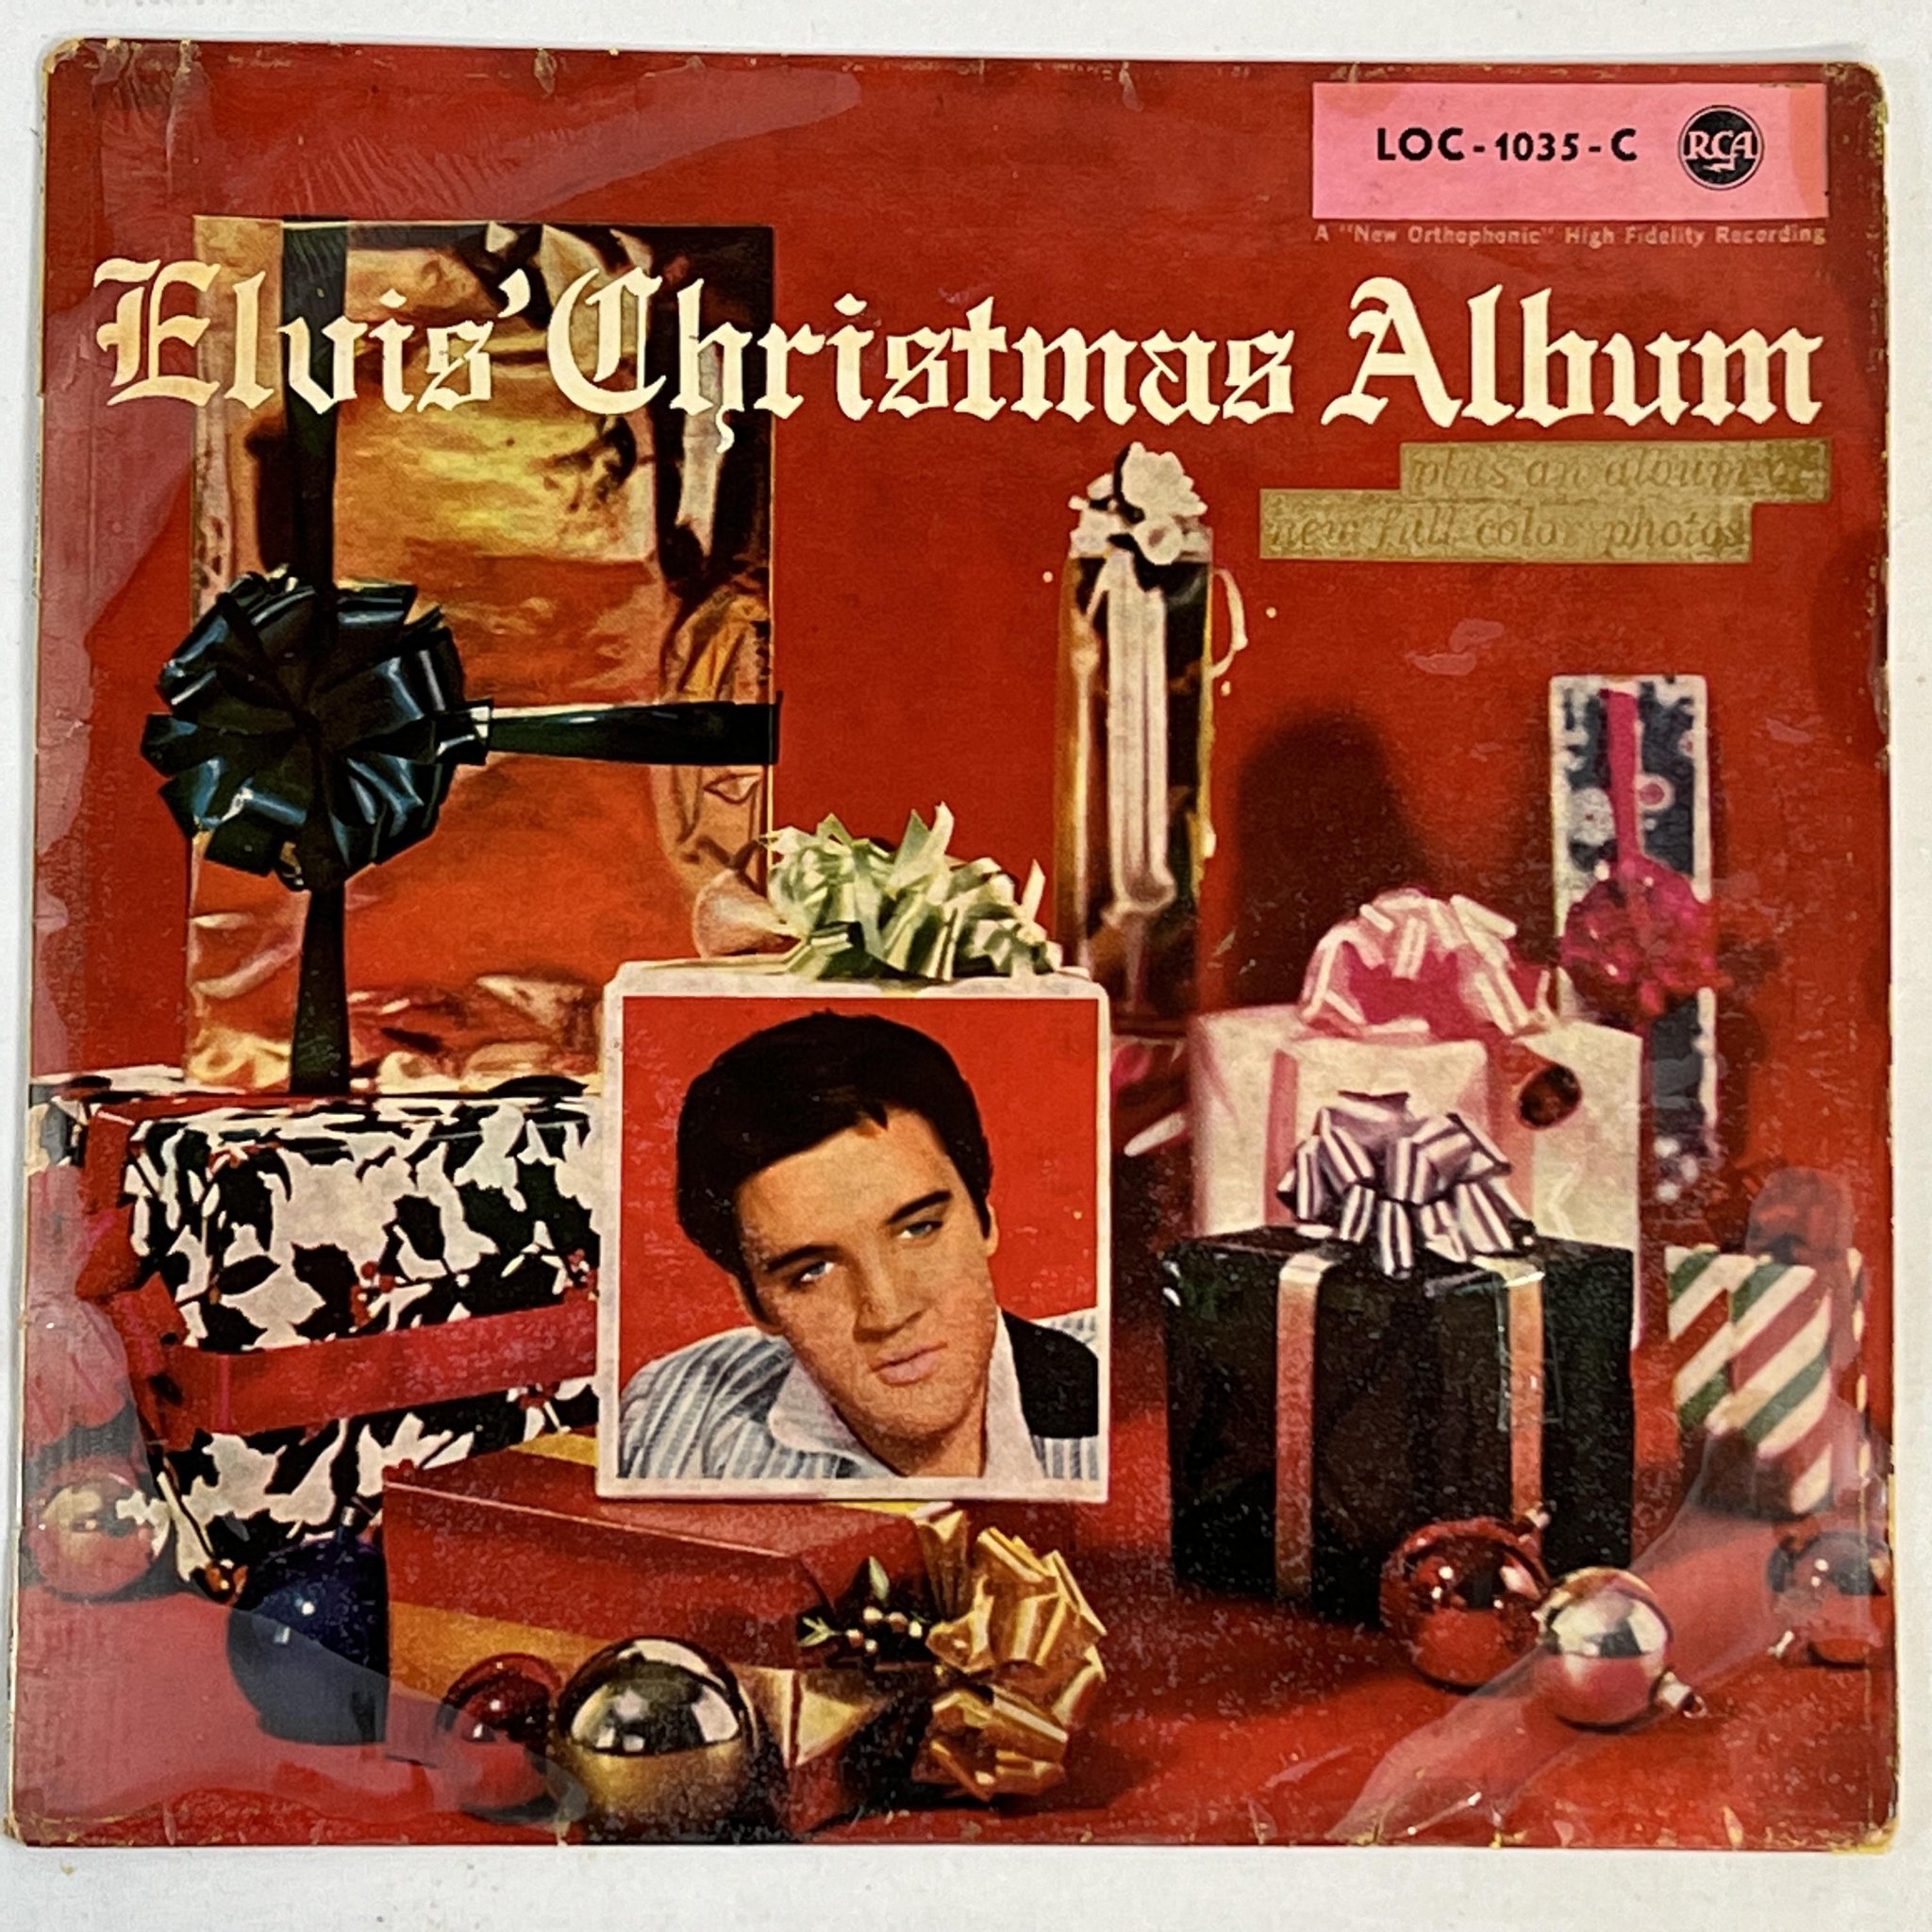 Omslagsbild för skivan ELVIS PRESLEY ELVIS' CHRISTMAS ALBUM LP -60 GER RCA LOC 1035 C ** WOW **